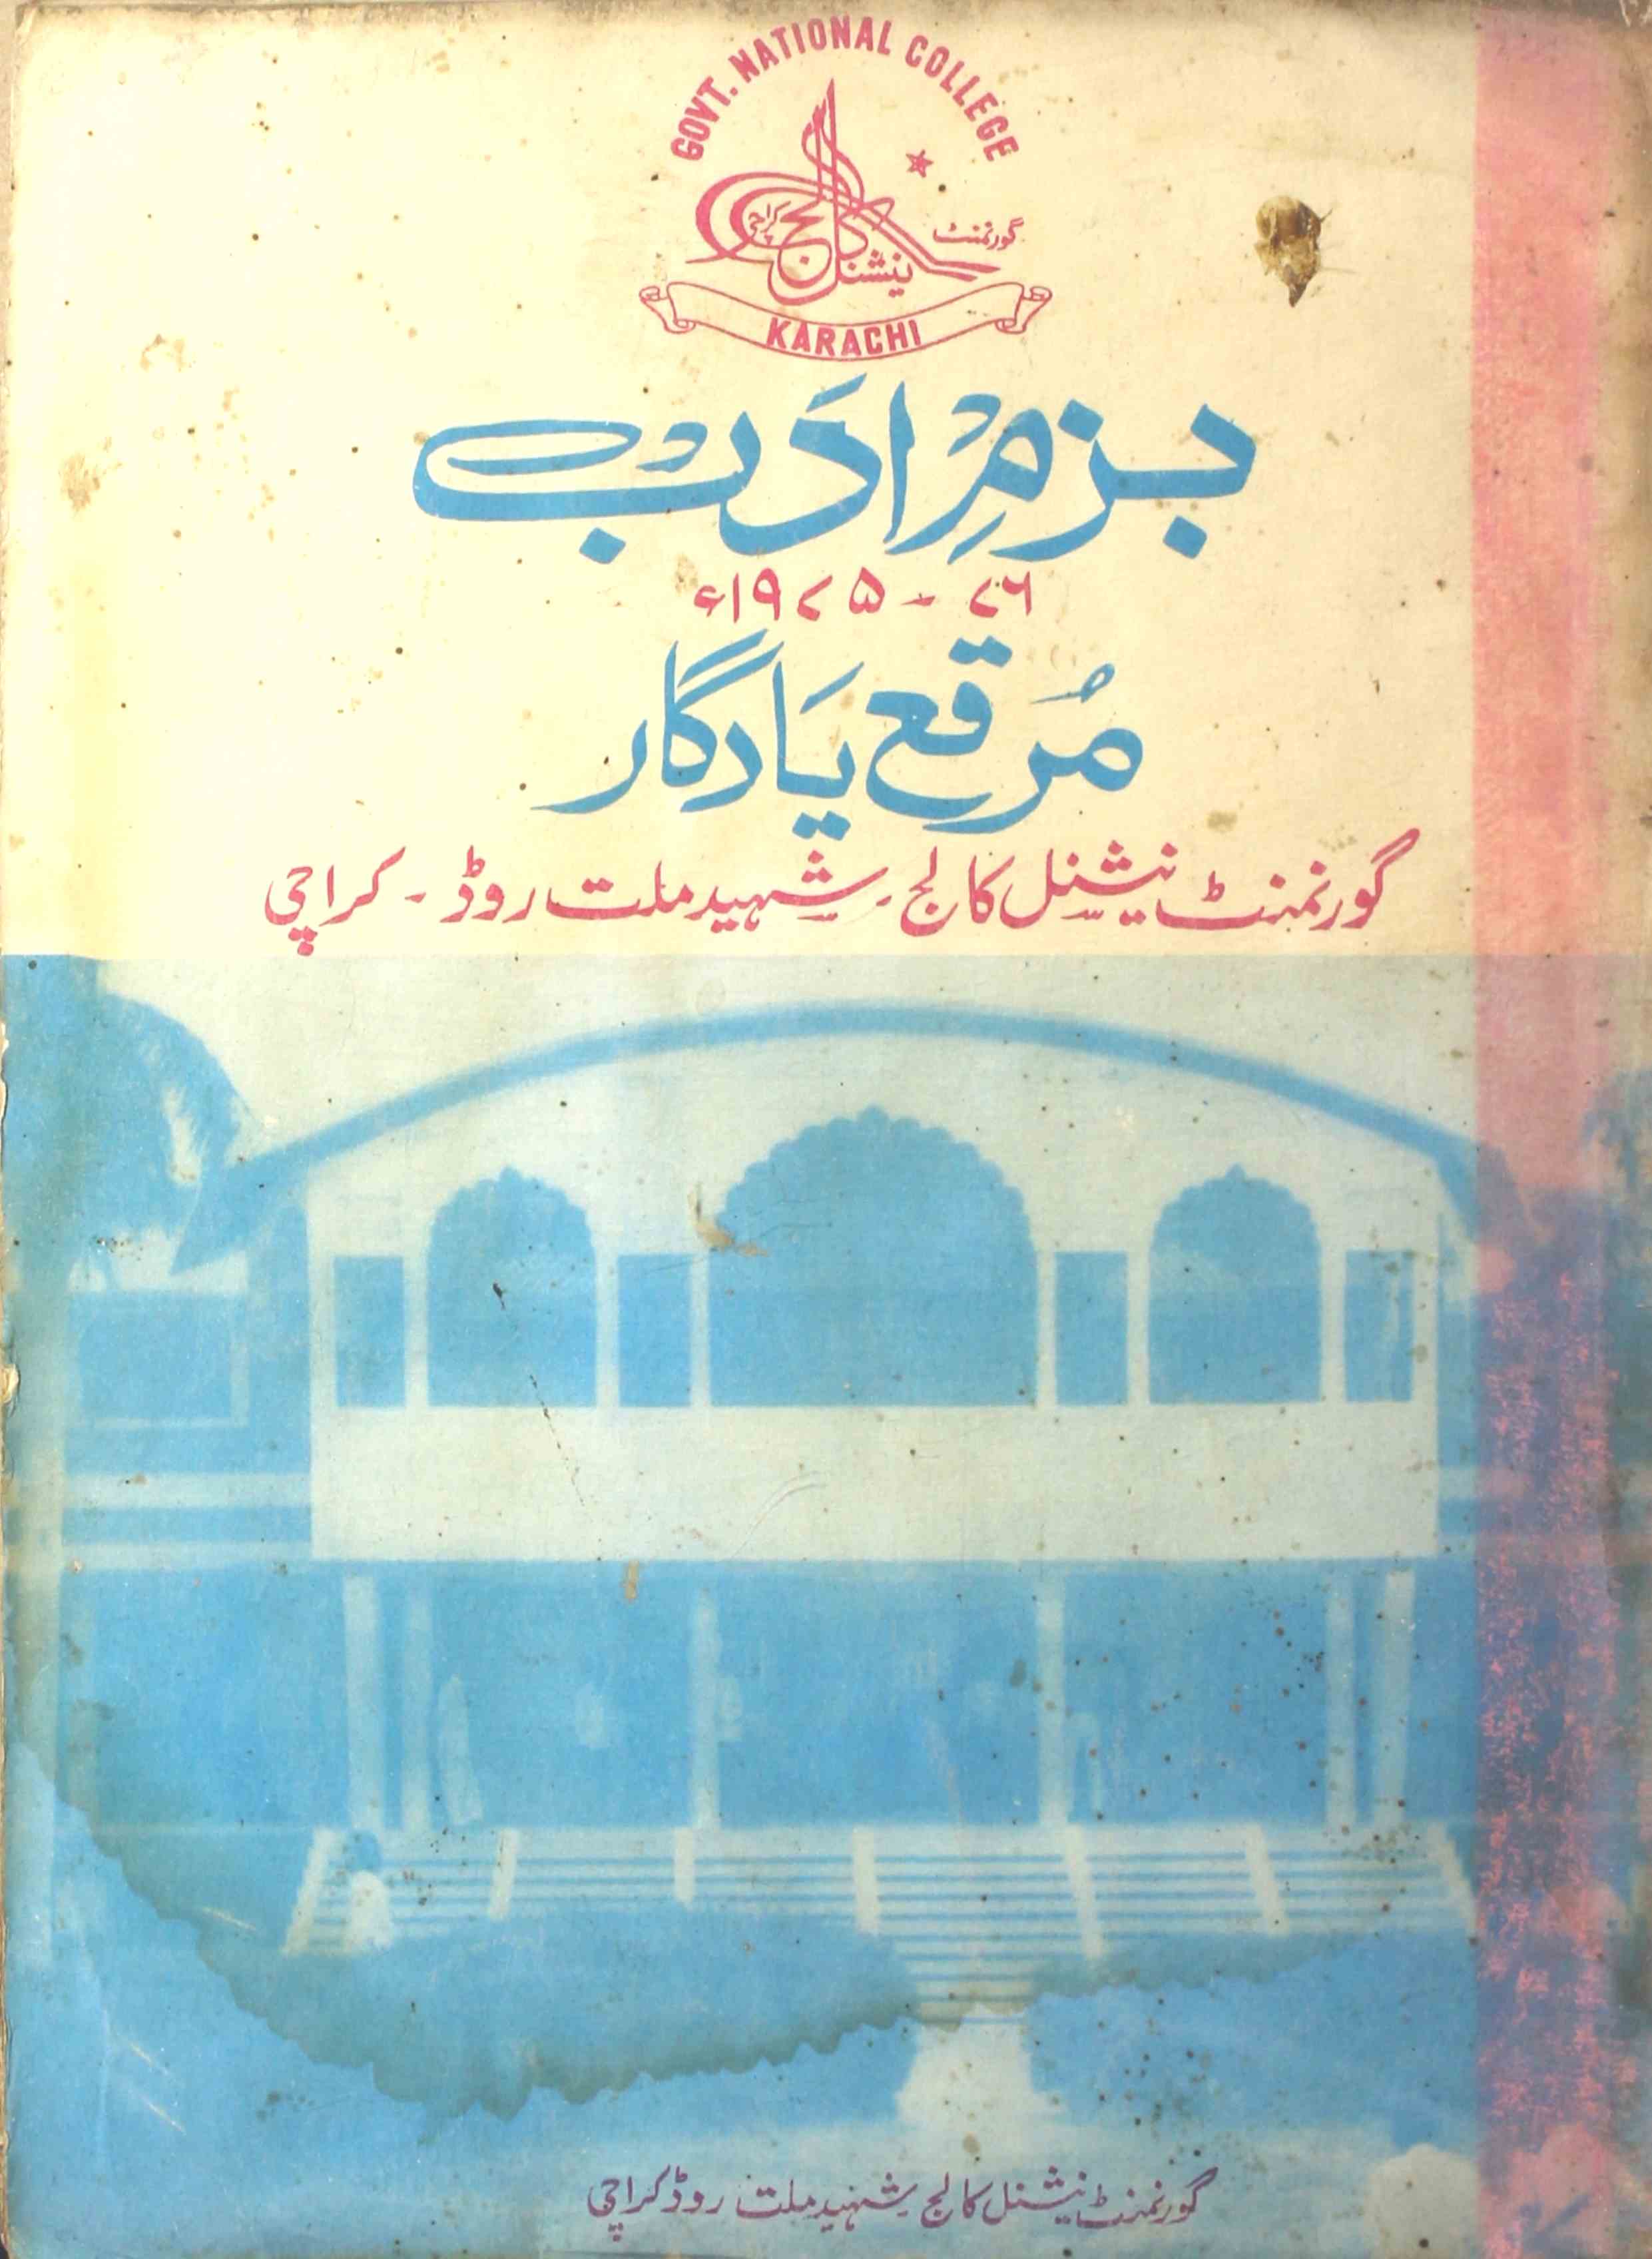 Bazm-e-Adab, Karachi